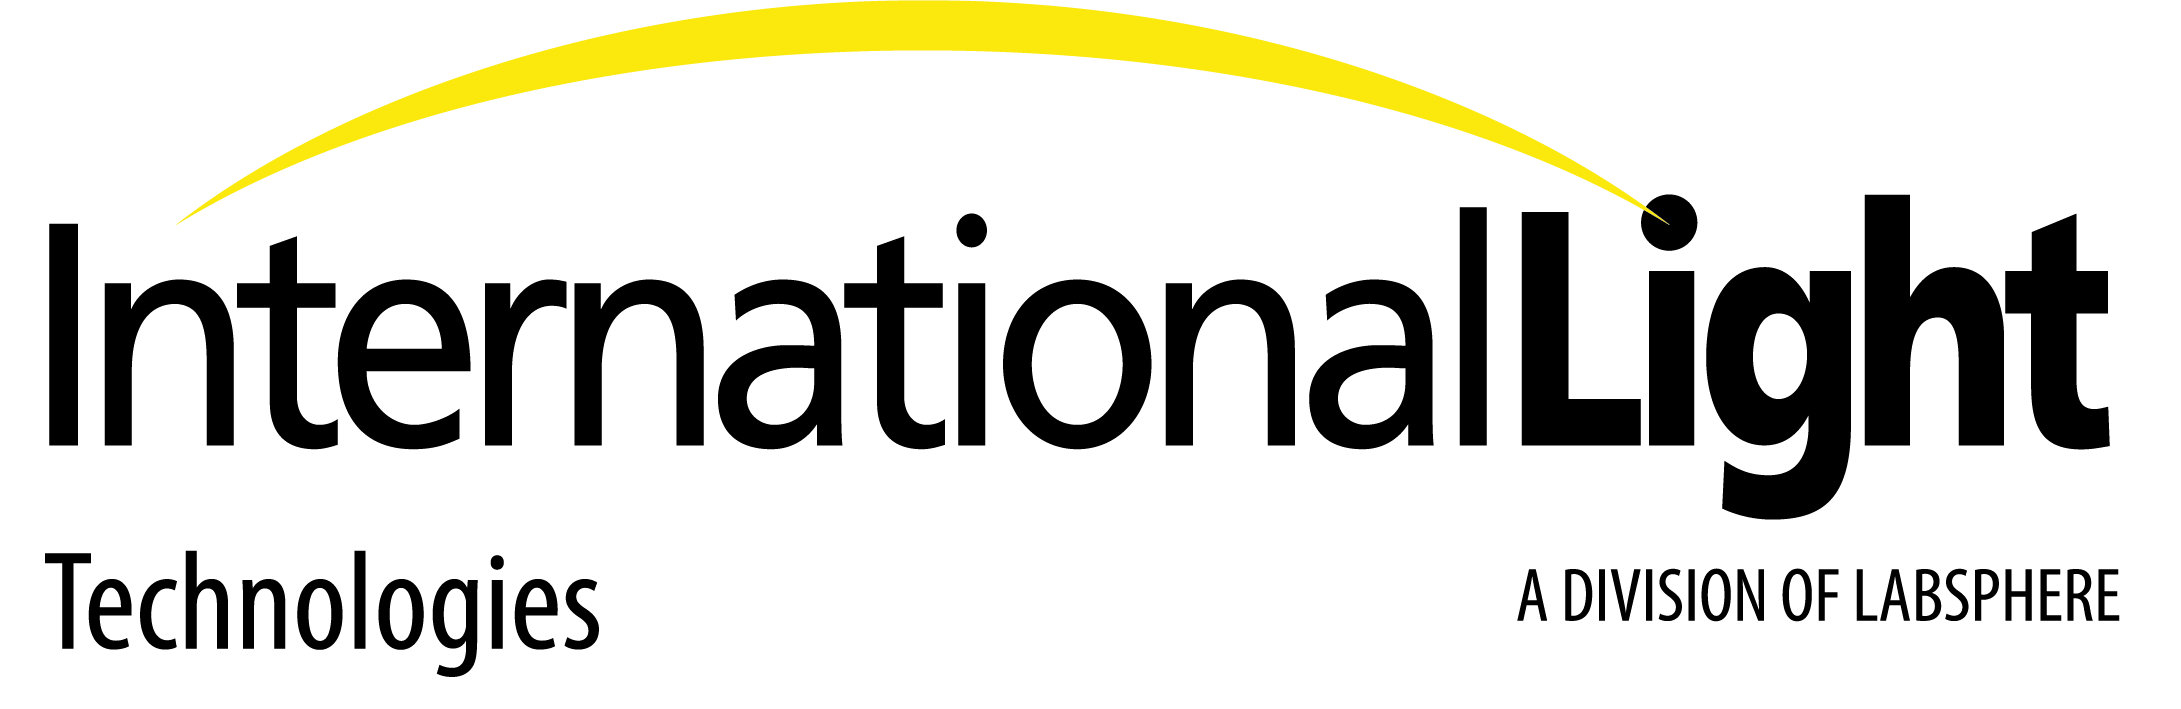 ILT_Labsphere_Logo_black&yellow.png